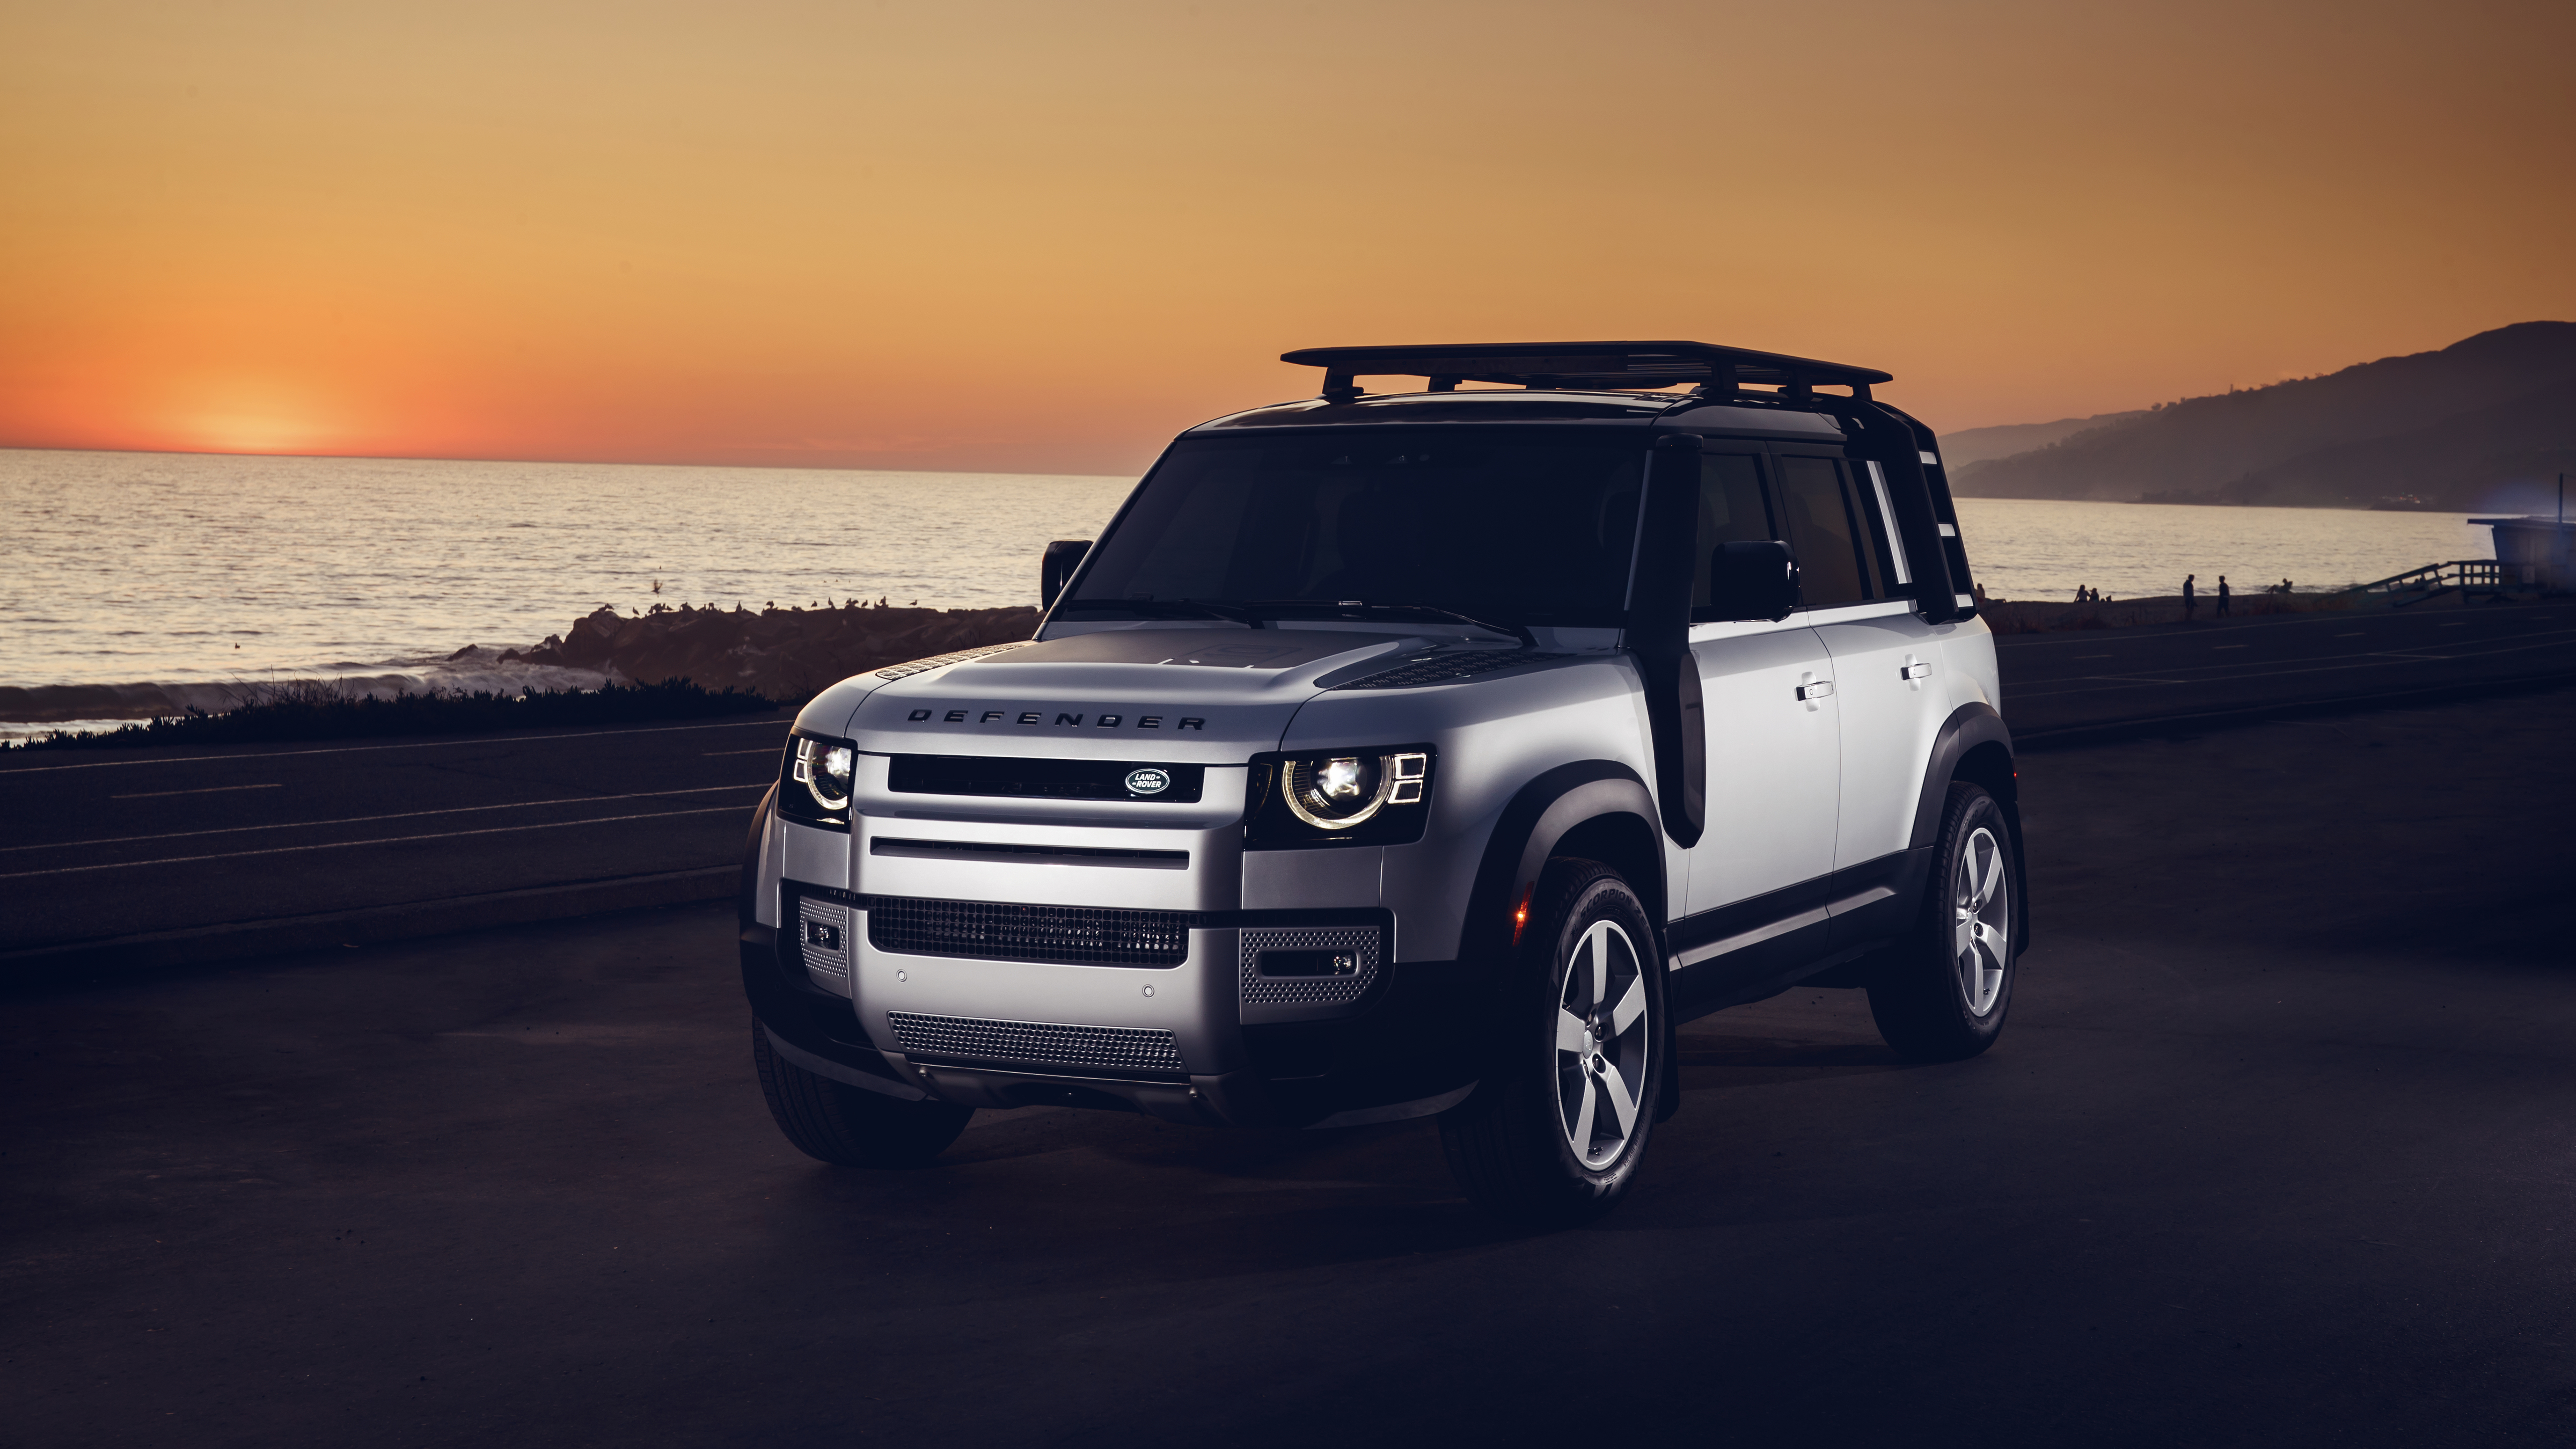 Descarga gratuita de fondo de pantalla para móvil de Land Rover, Vehículos, Defensor Land Rover.